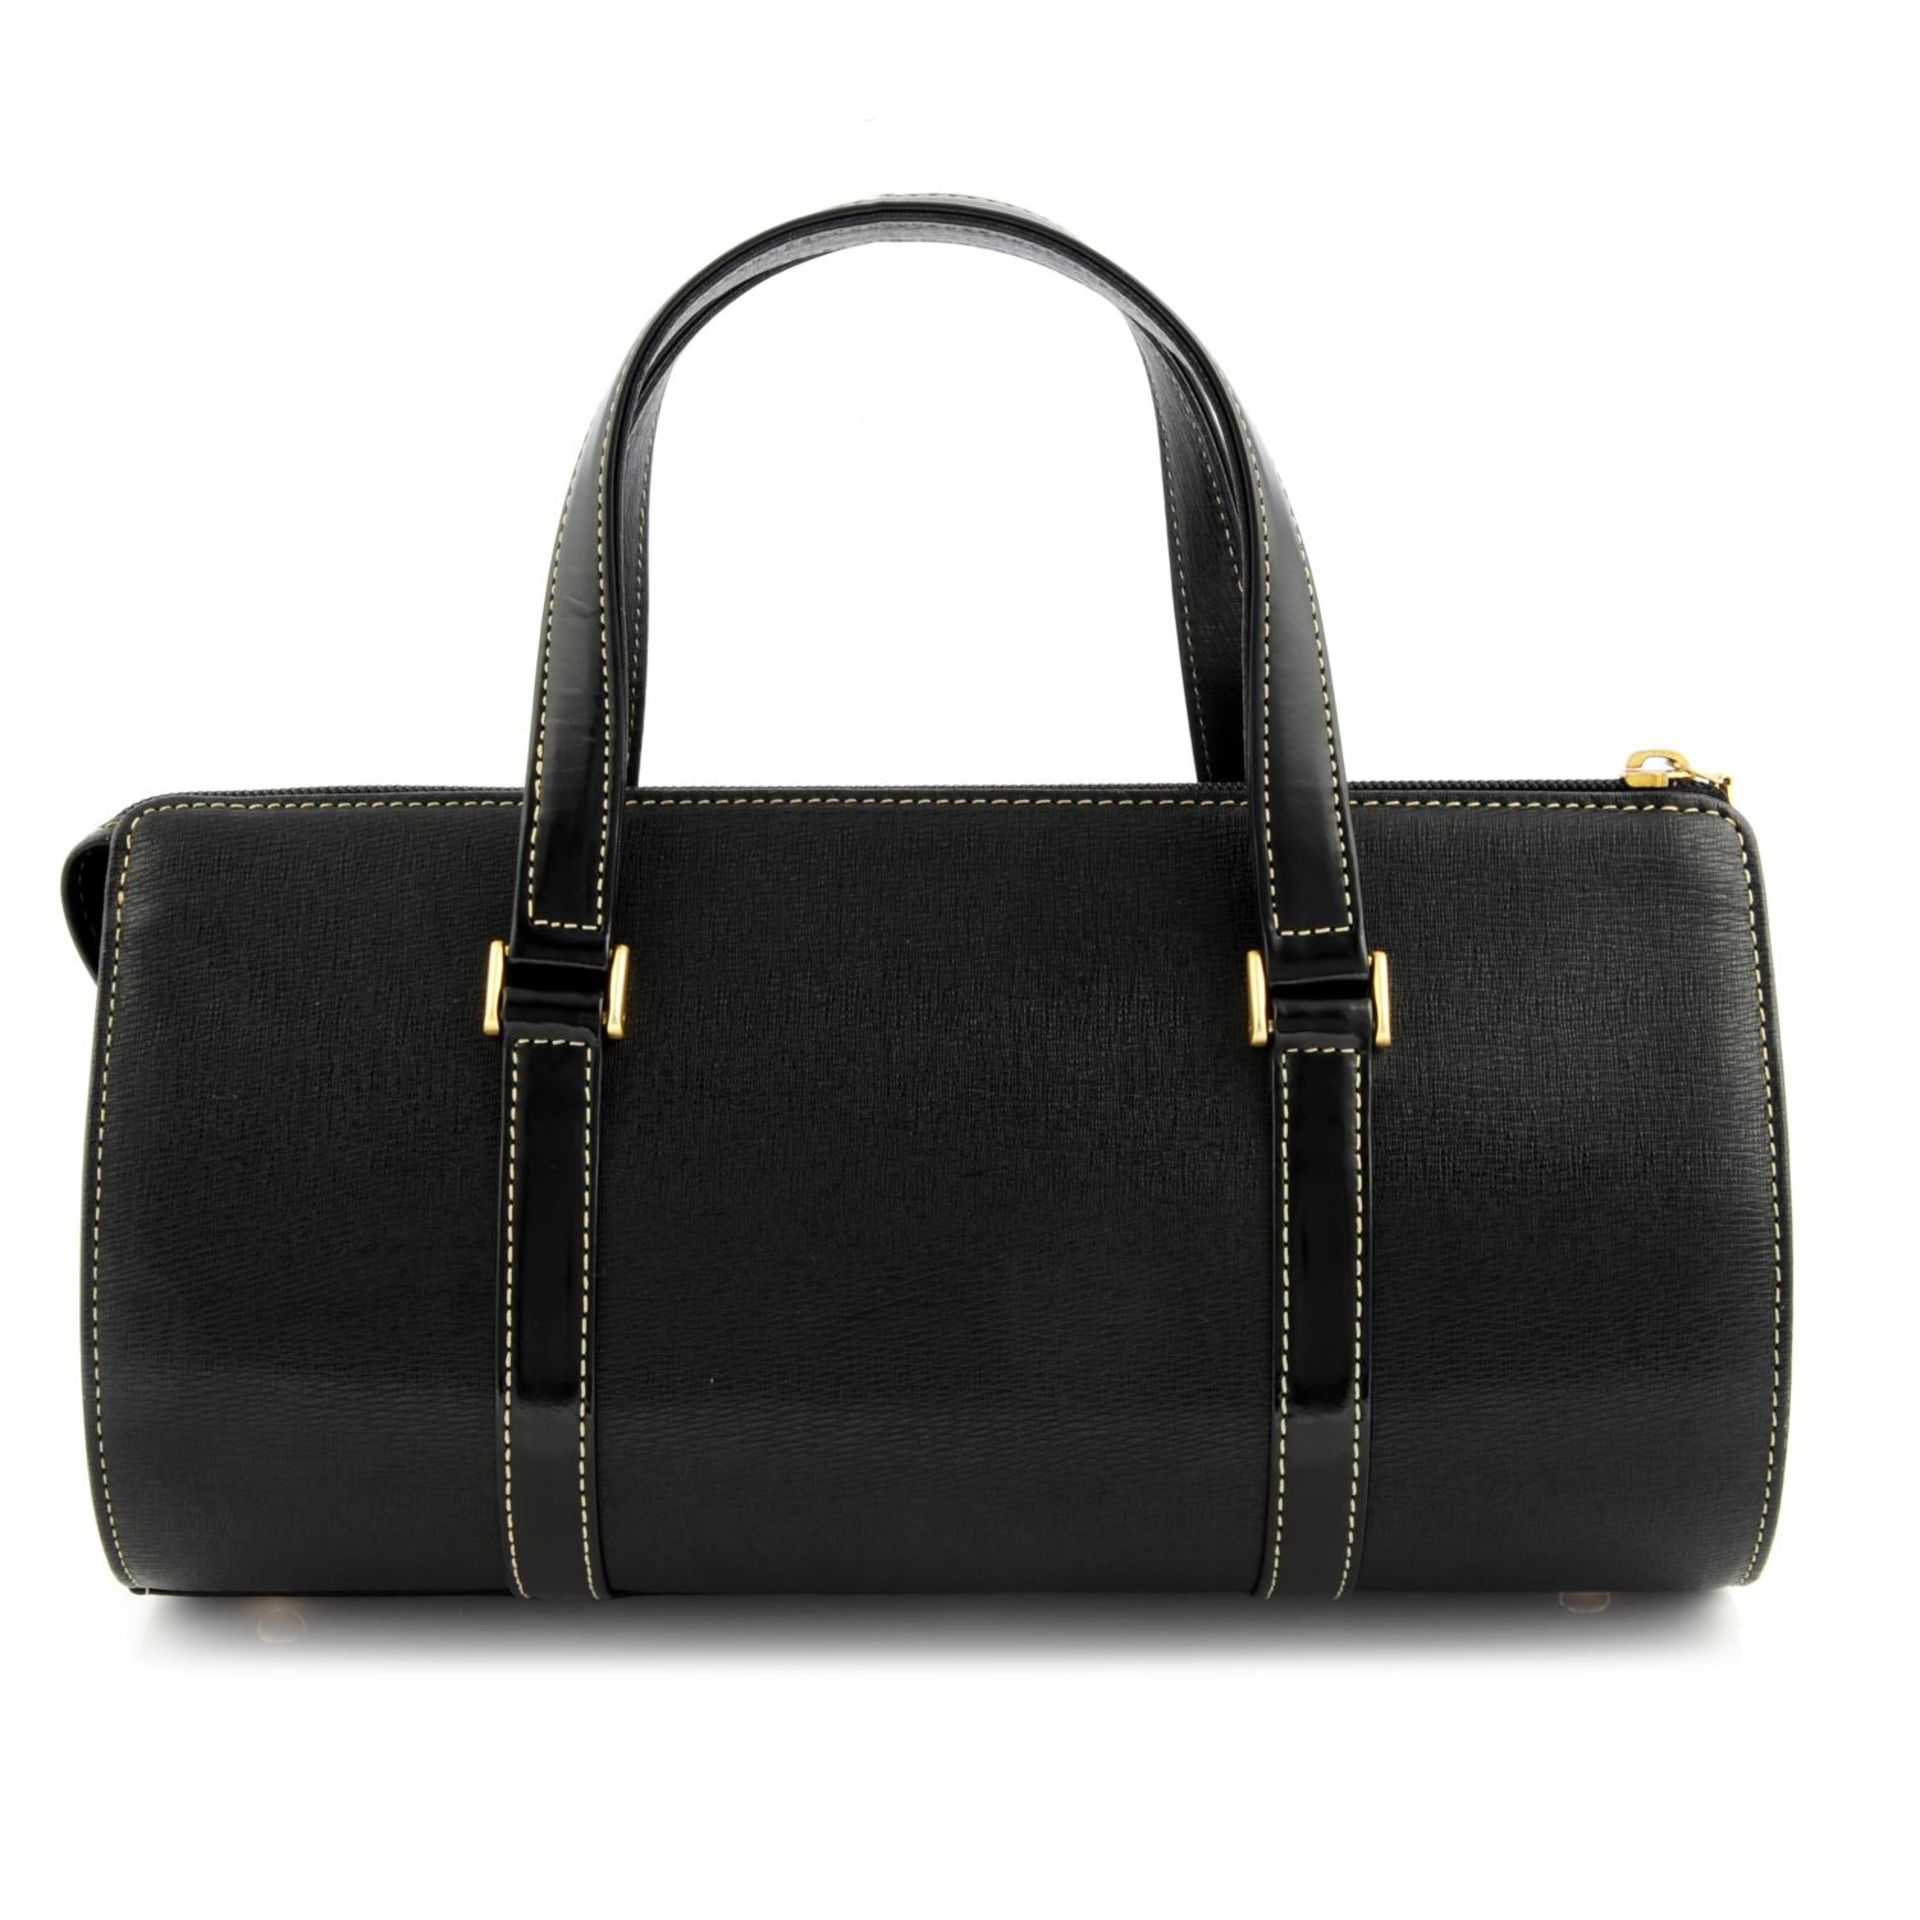 BURBERRY - a black leather handbag. - Image 2 of 4